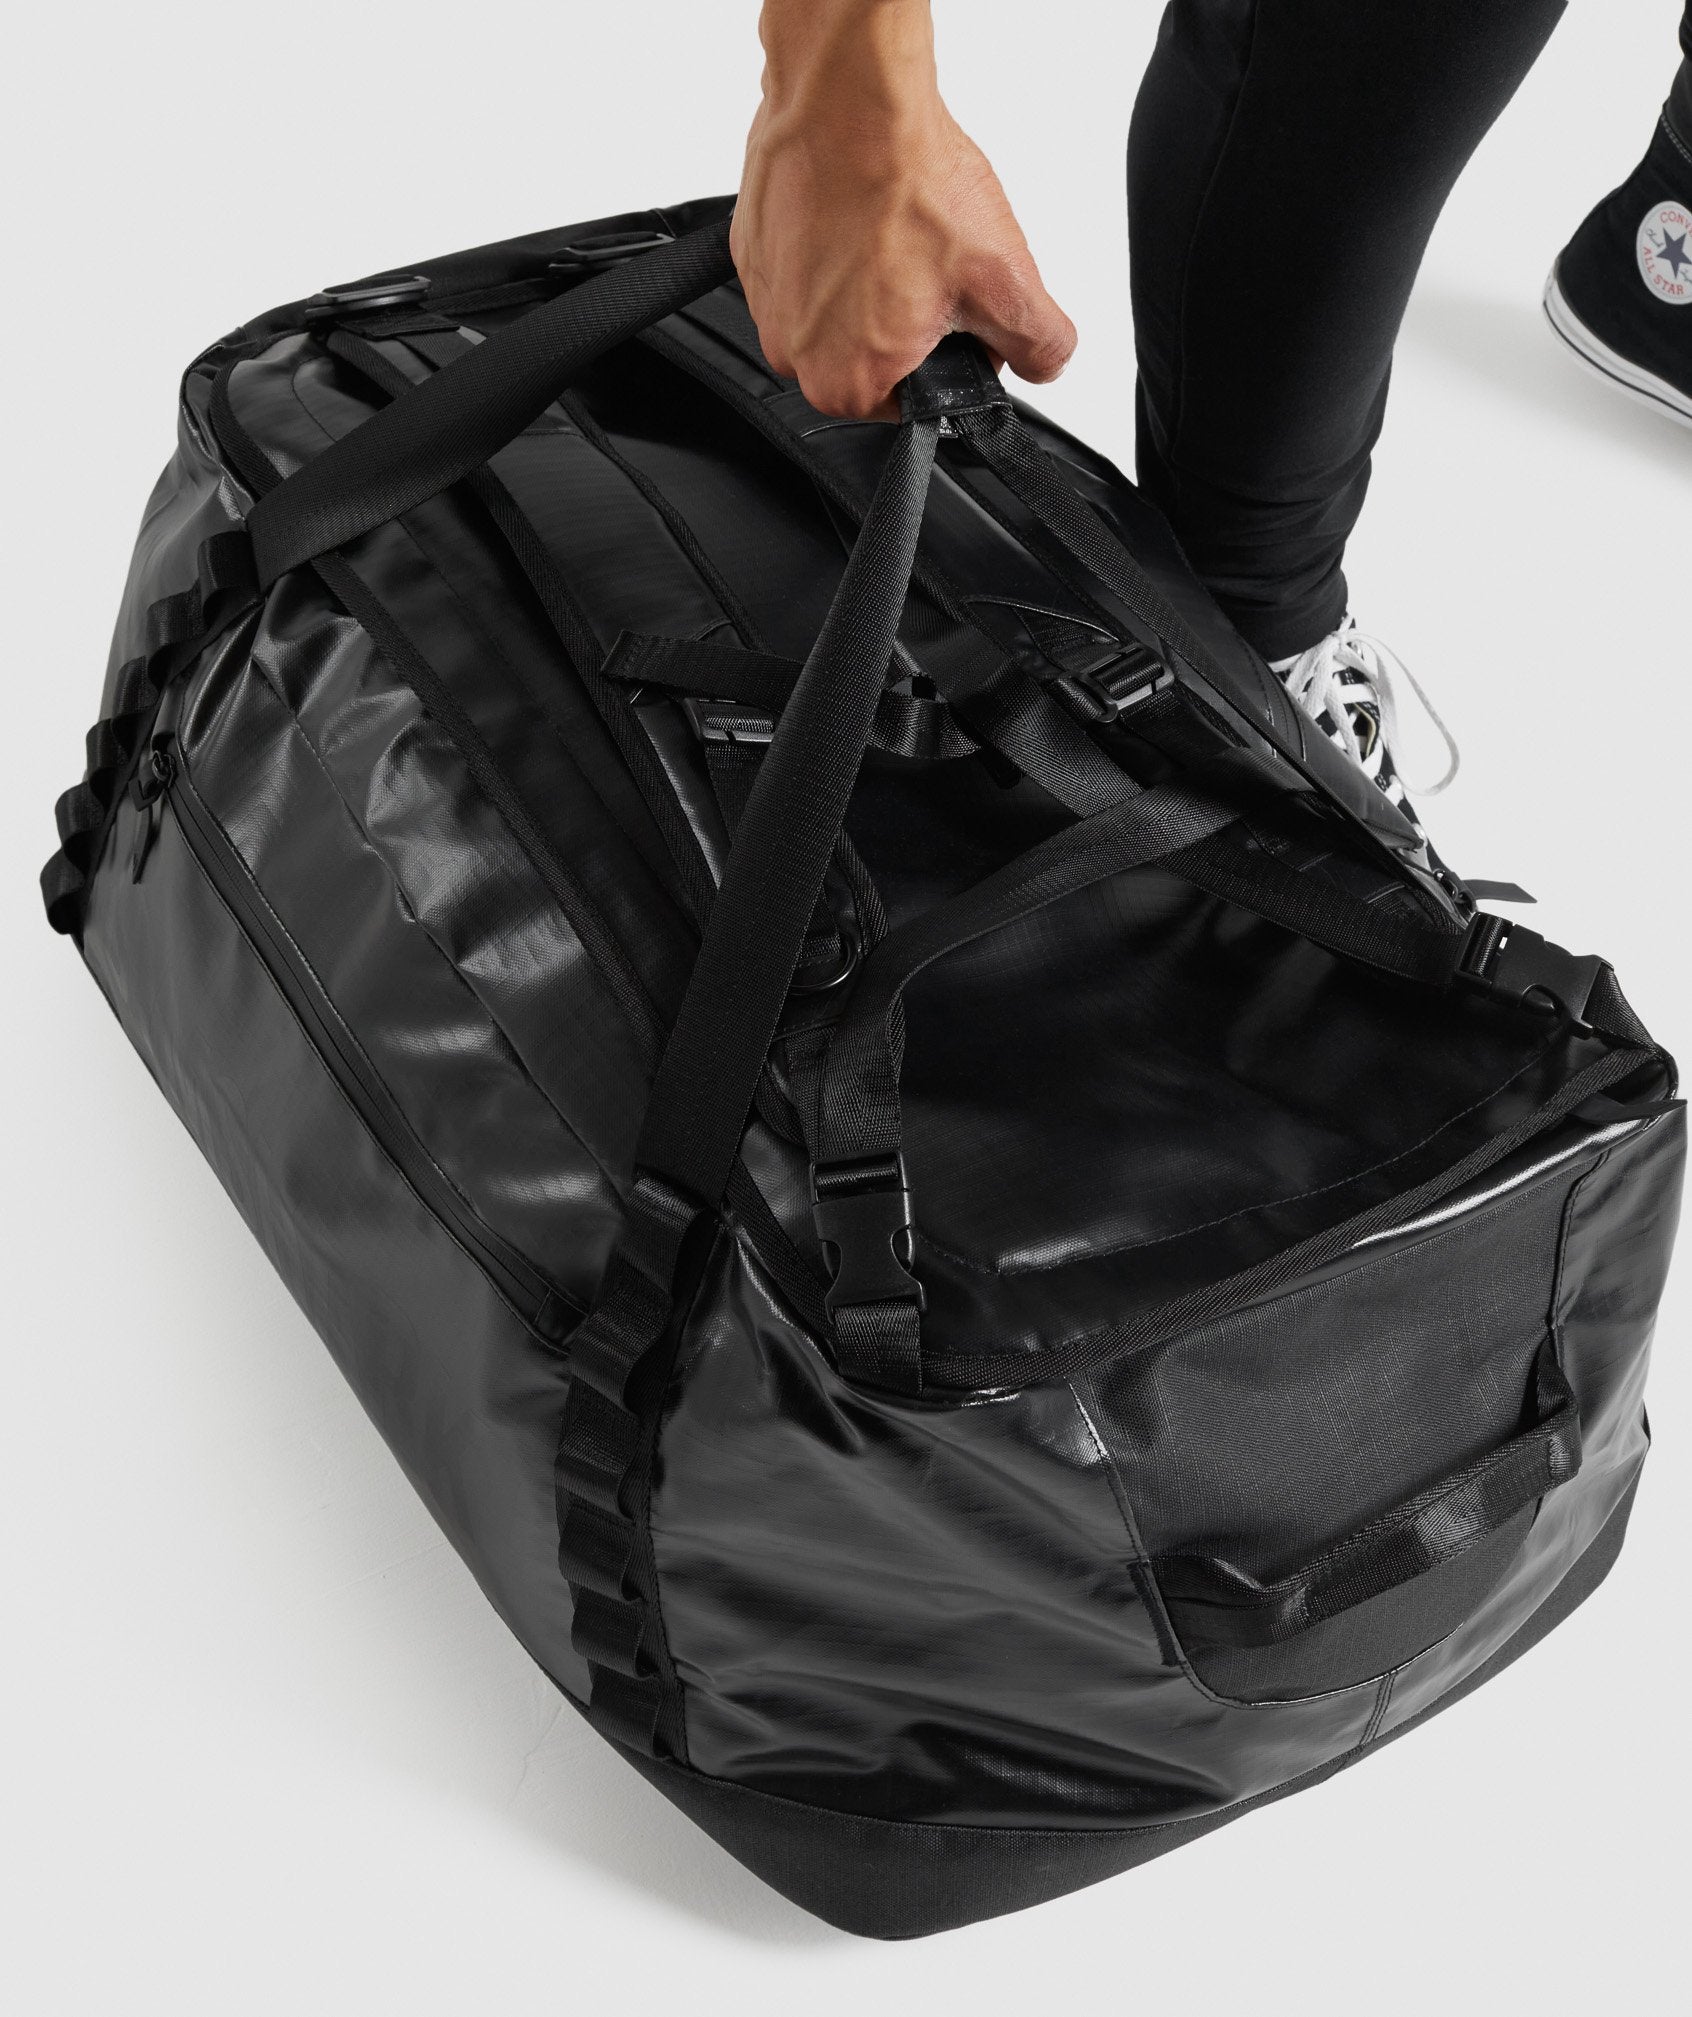 X Series Duffle Bag in Black - view 5